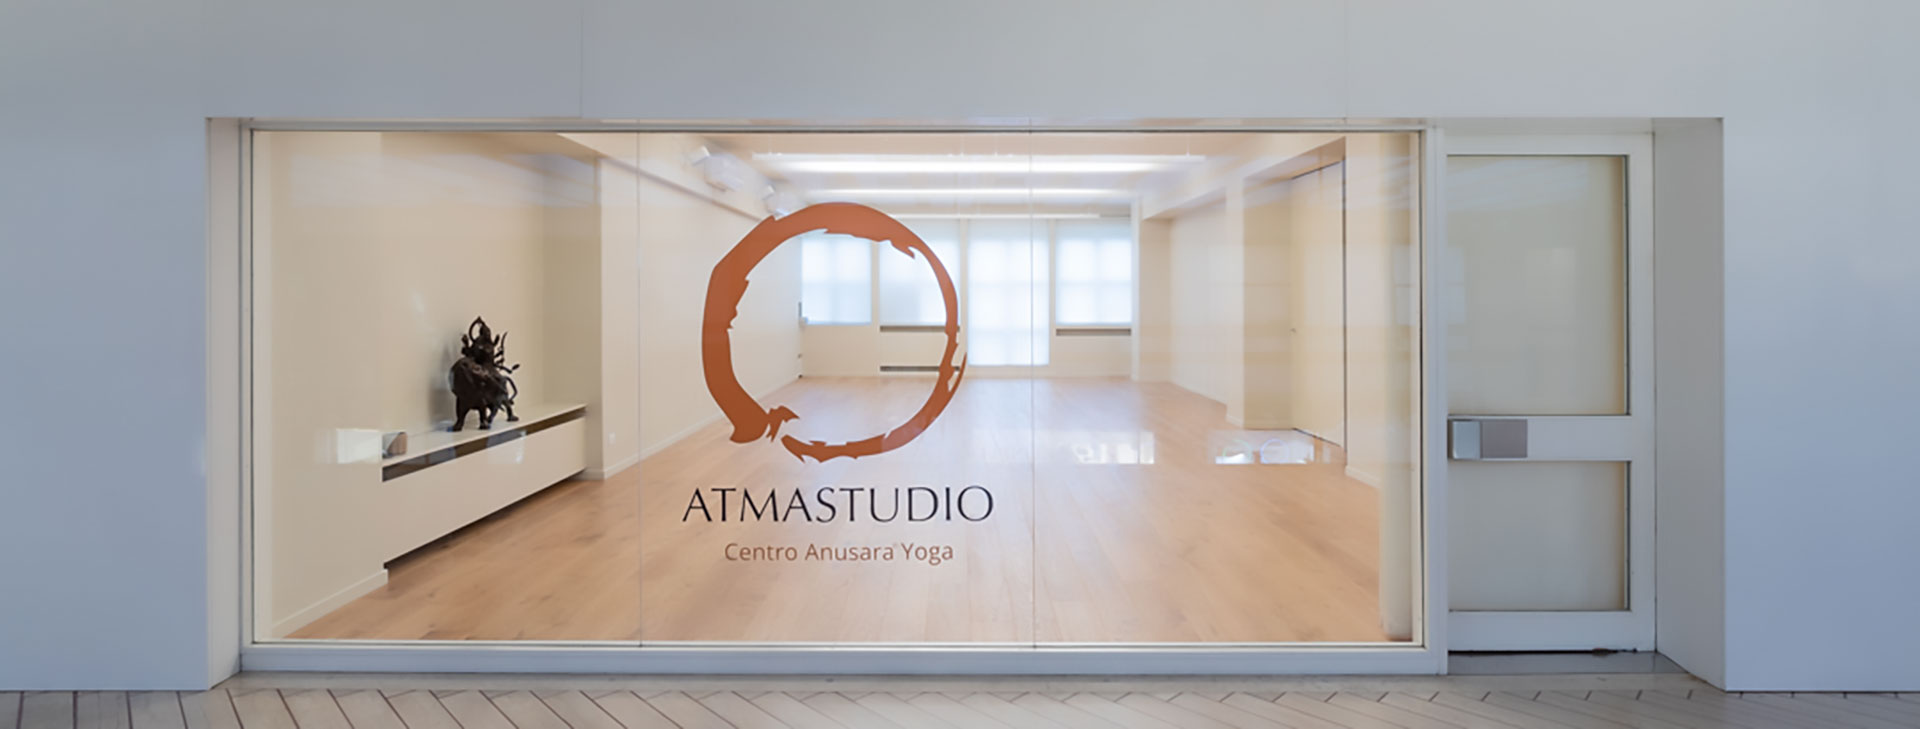 Atma Studio